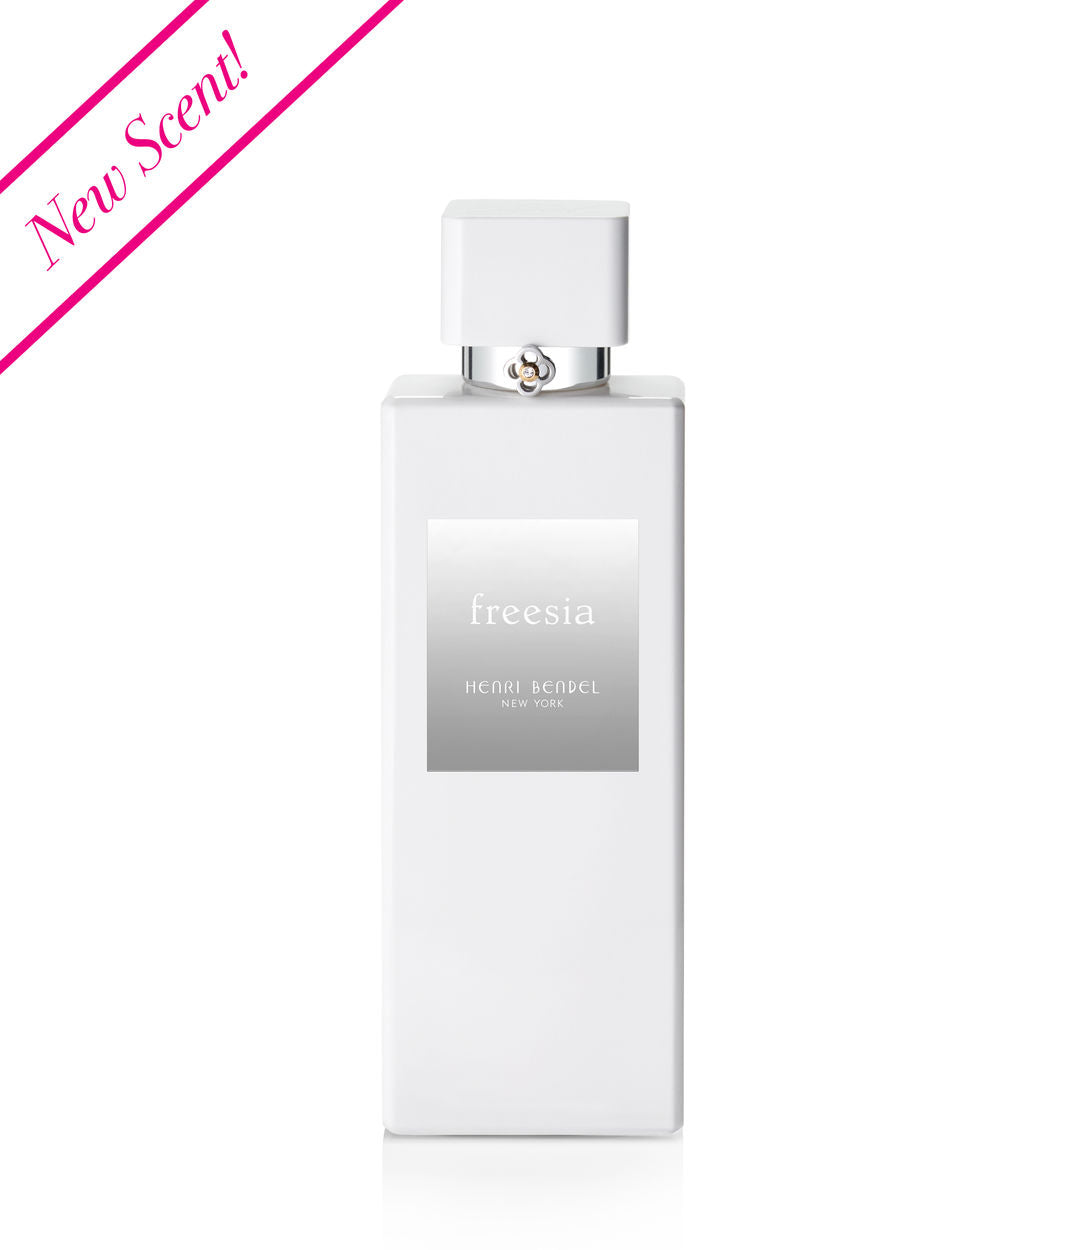 Review, Fragrance Trend 2017, 2018: Henri Bendel Freesia Perfume